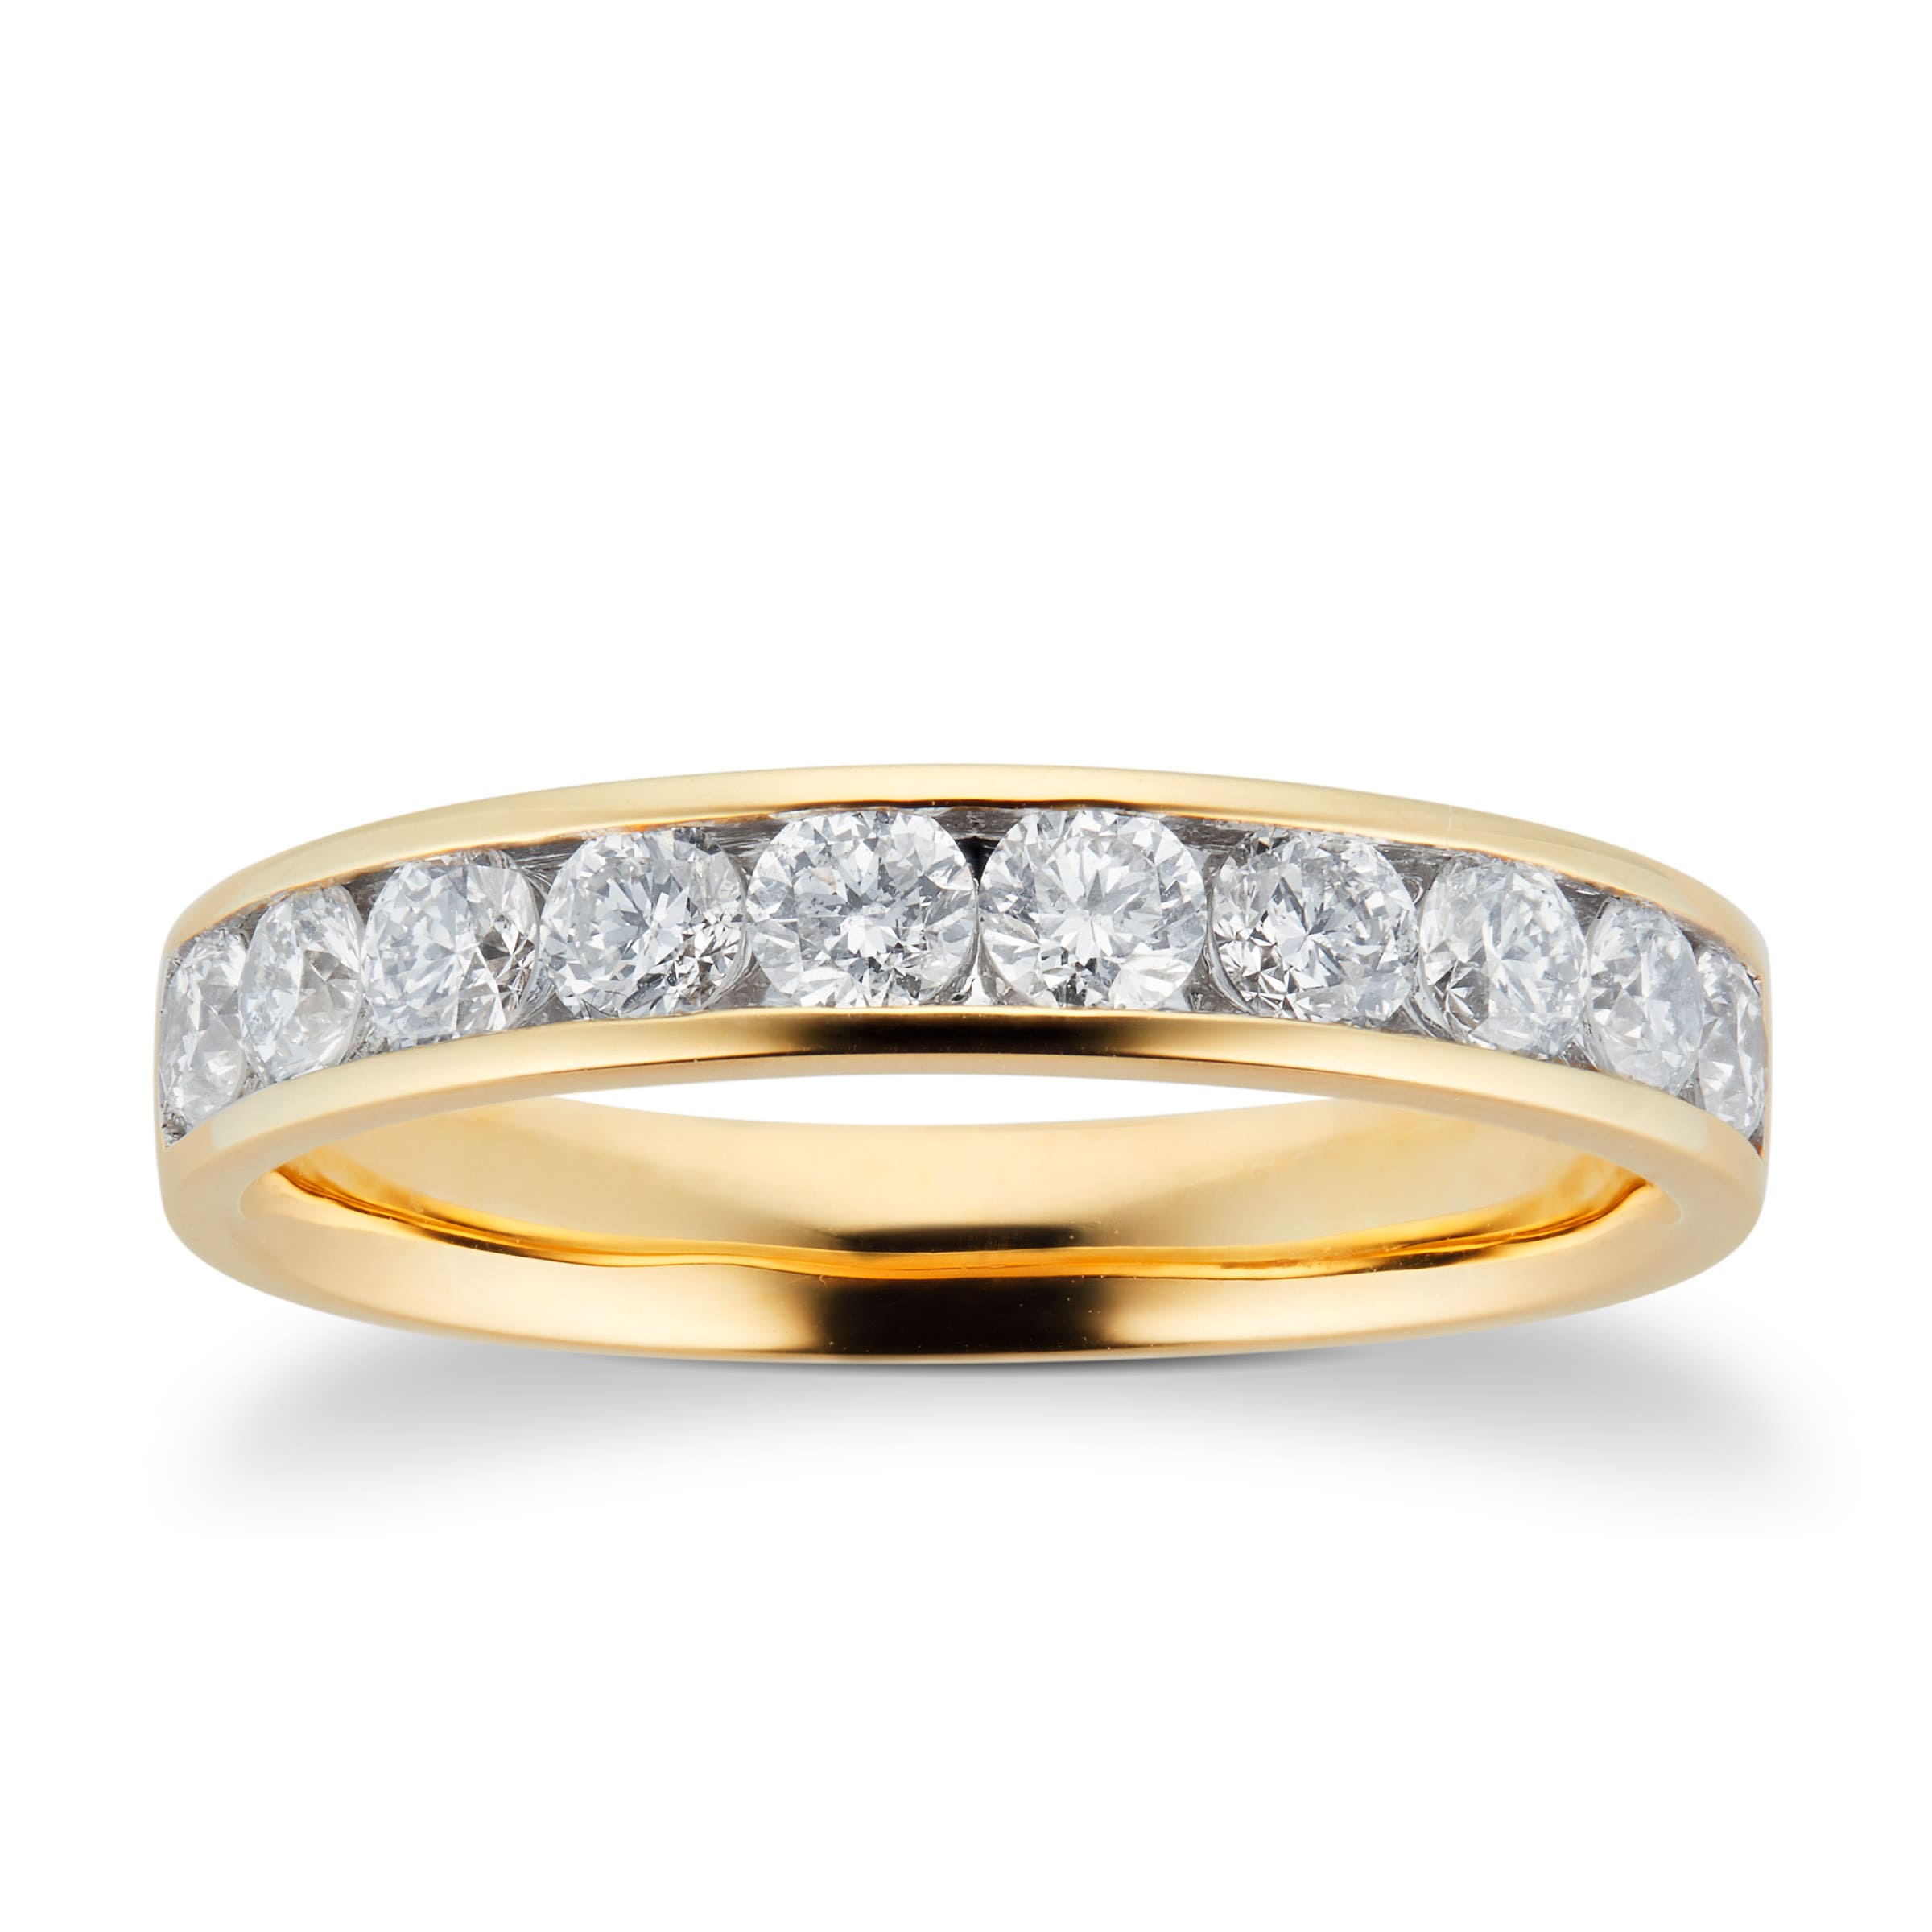 18ct Yellow Gold 0.75ct Brilliant Cut Goldsmiths Brightest Diamond Eternity Ring - Ring Size K